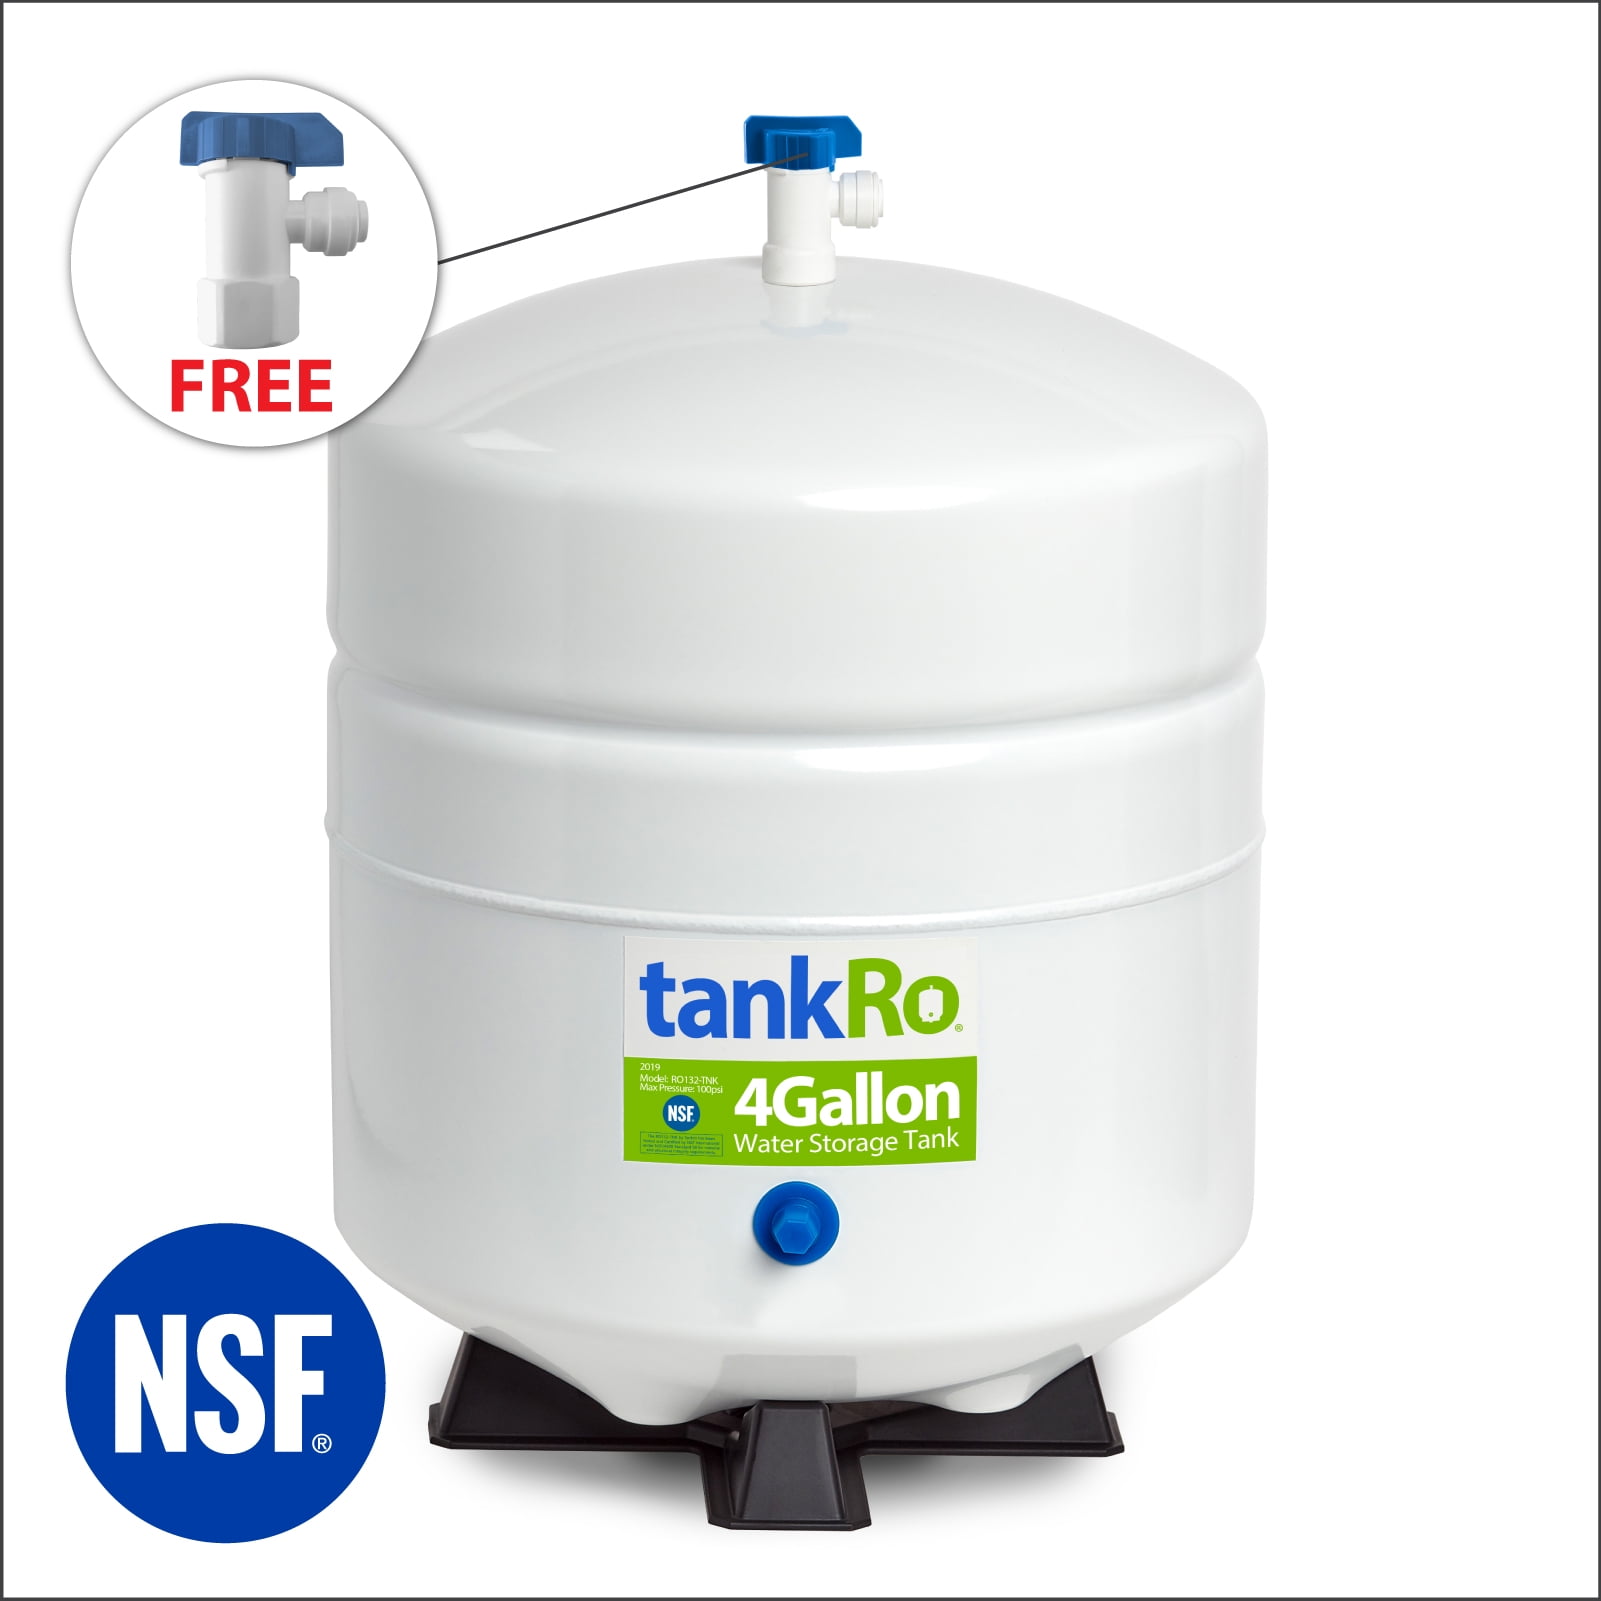 RO Expansion Tank 4 Gallon NSF Certified Compact Reverse Osmosis Water Storage Pressure Tank